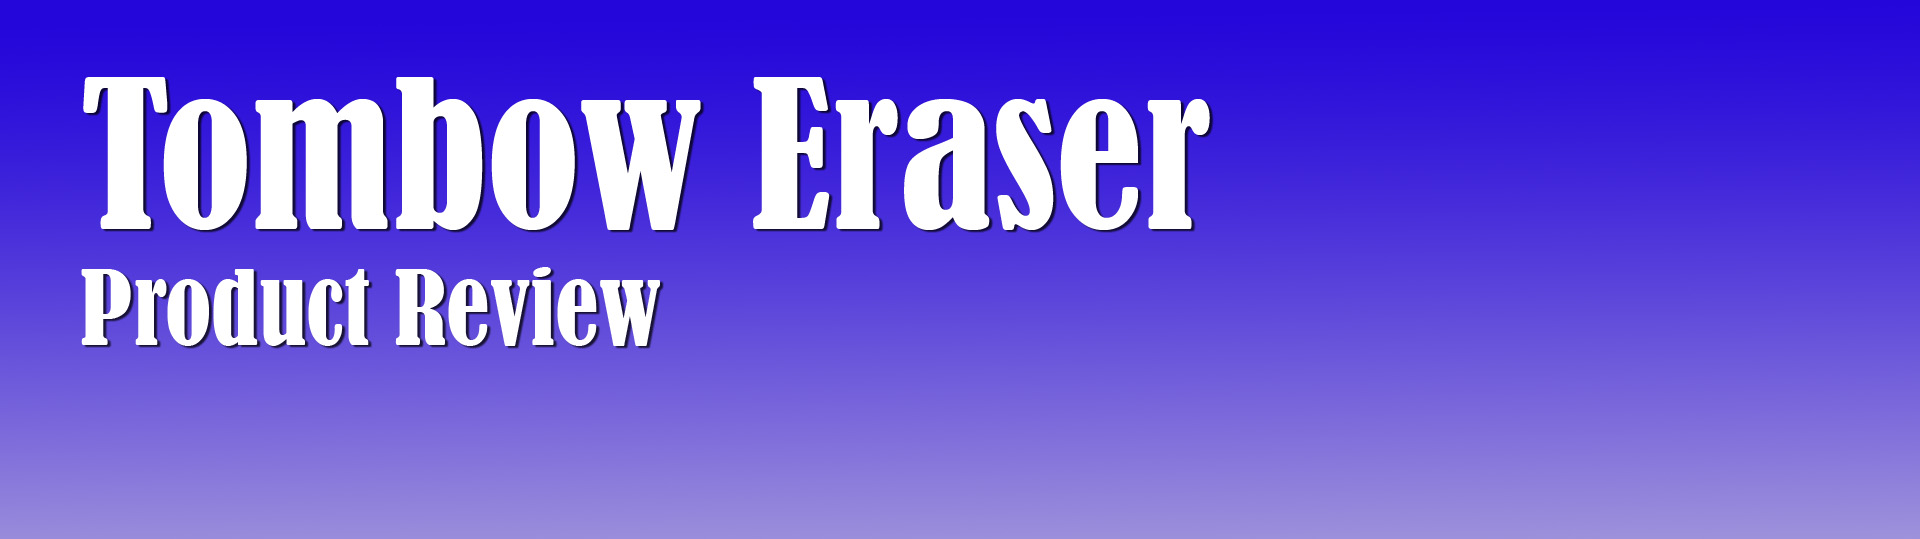 Tombow Eraser